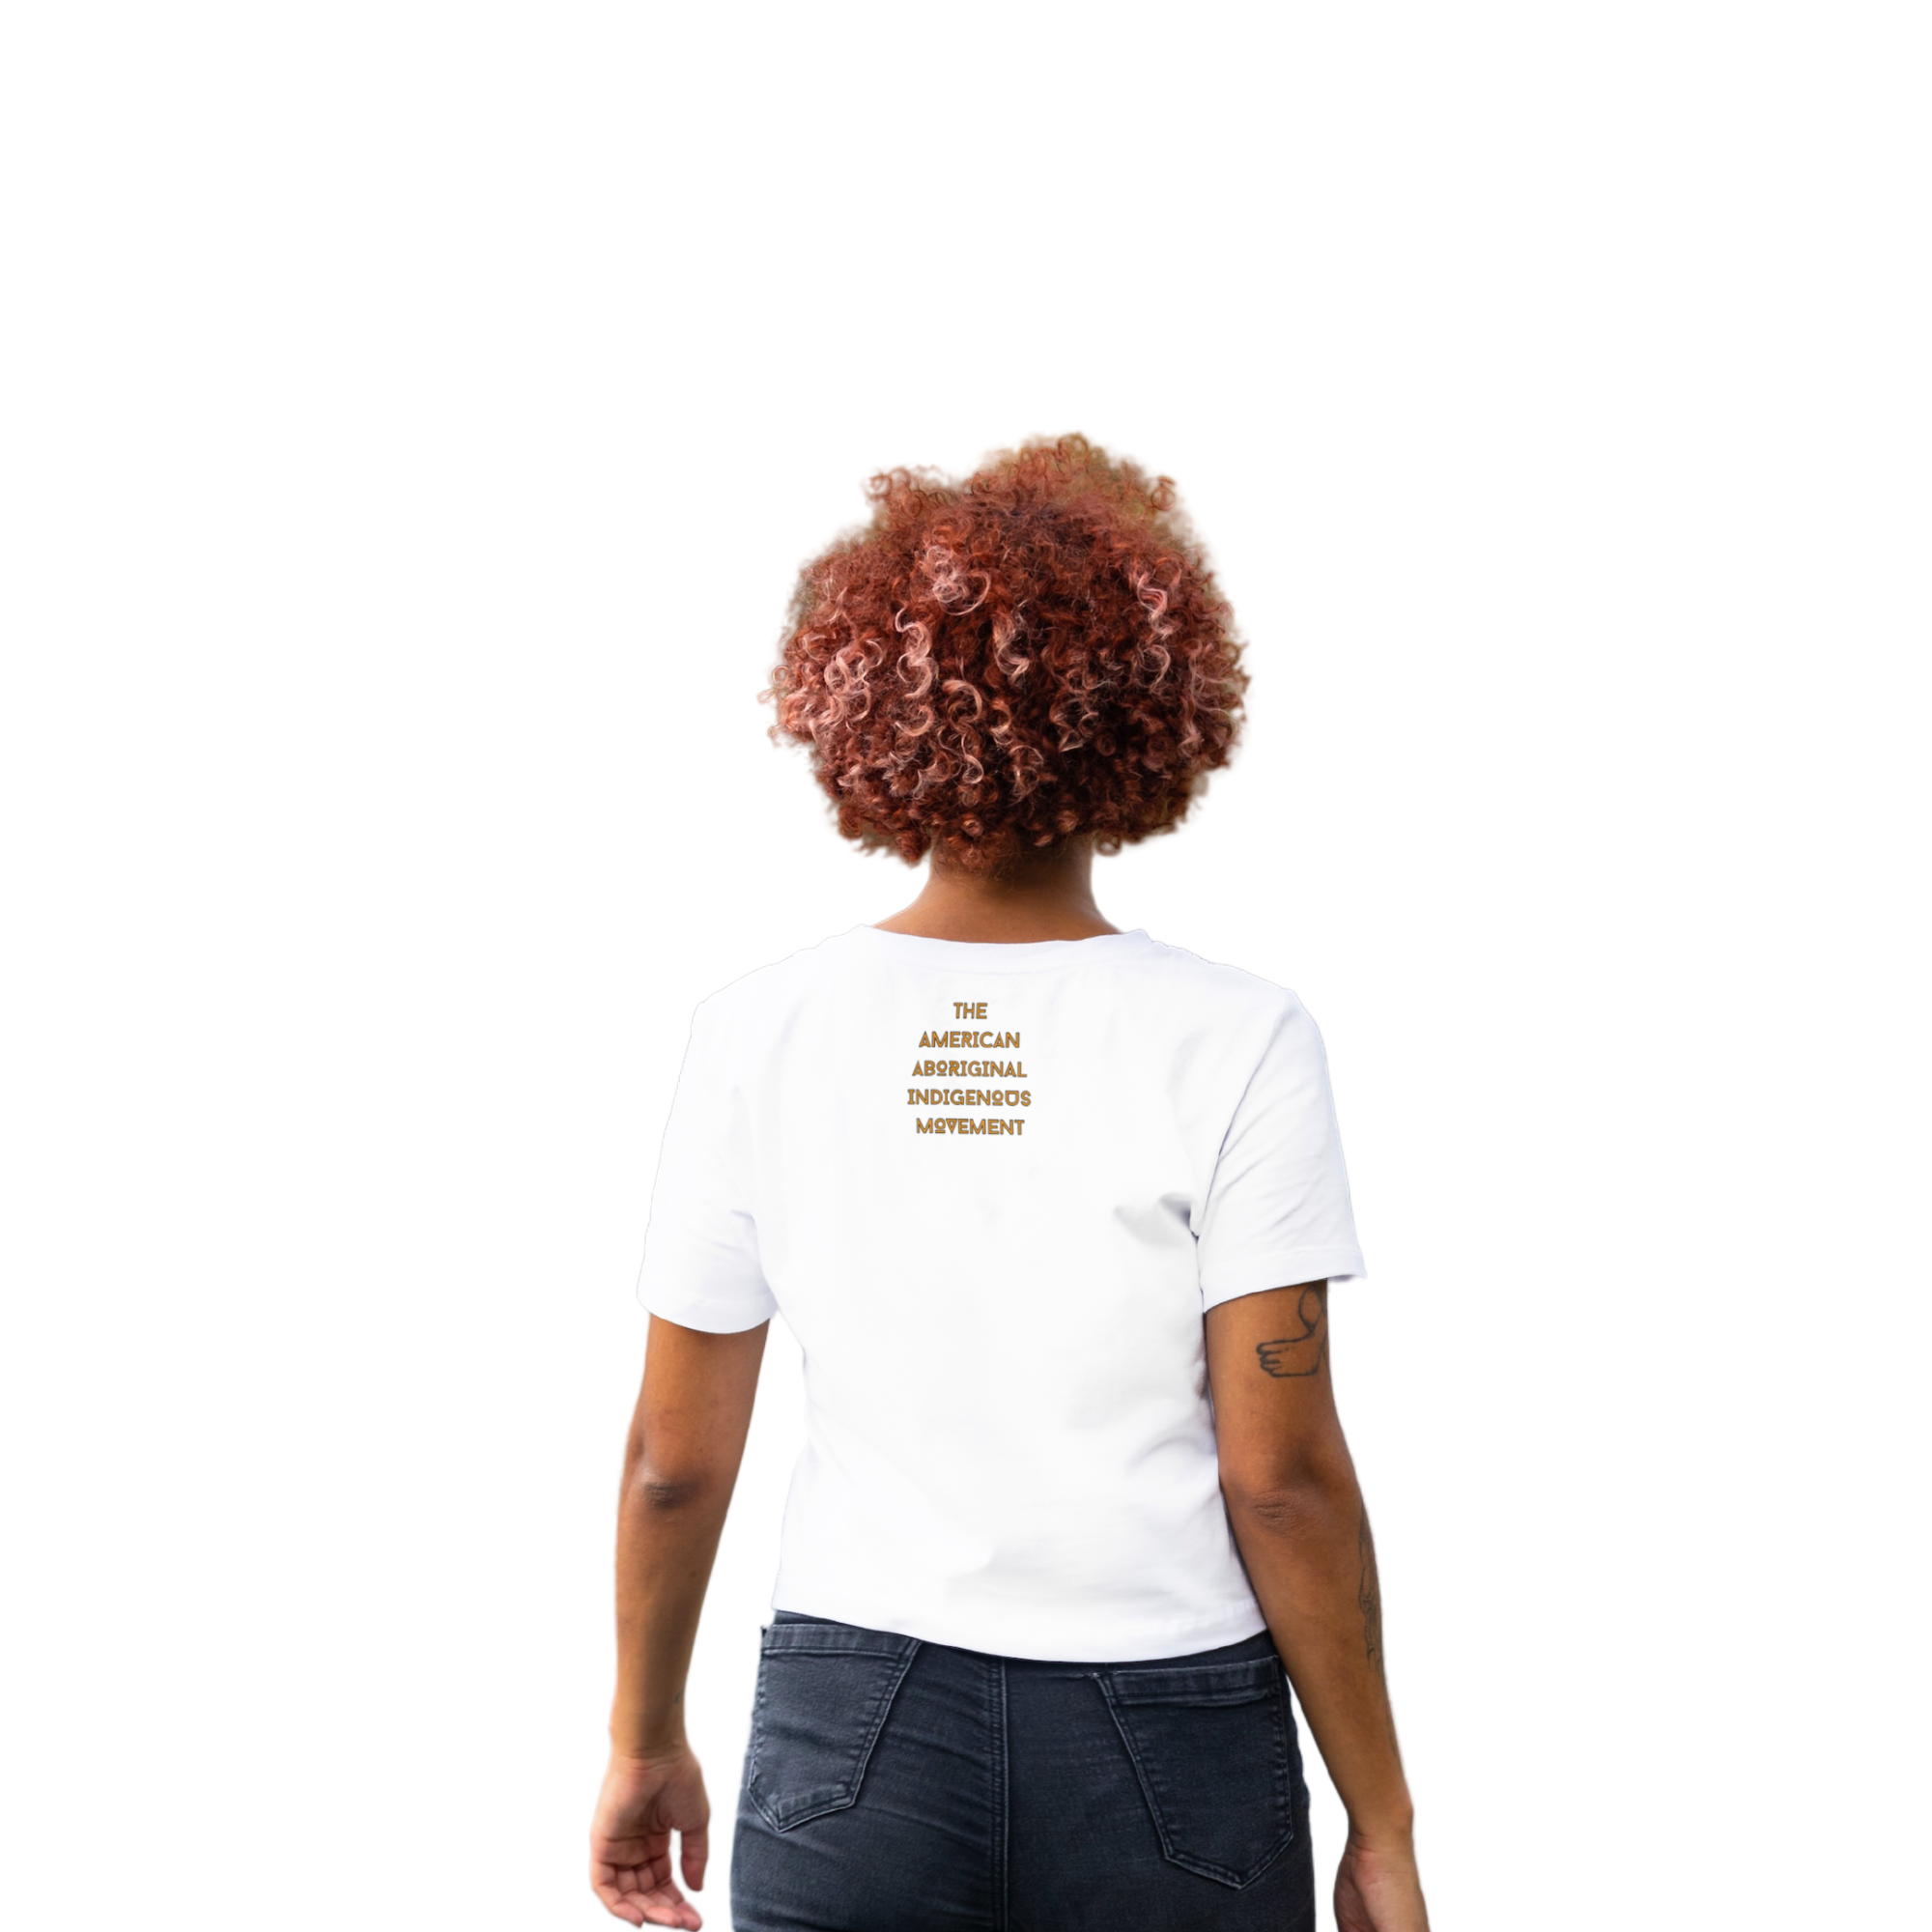 THE AMERICAN ABORIGINAL INDIGENOUS MOVEMENT – SPONSORED DONATION PRODUCT –Women’s T-Shirt